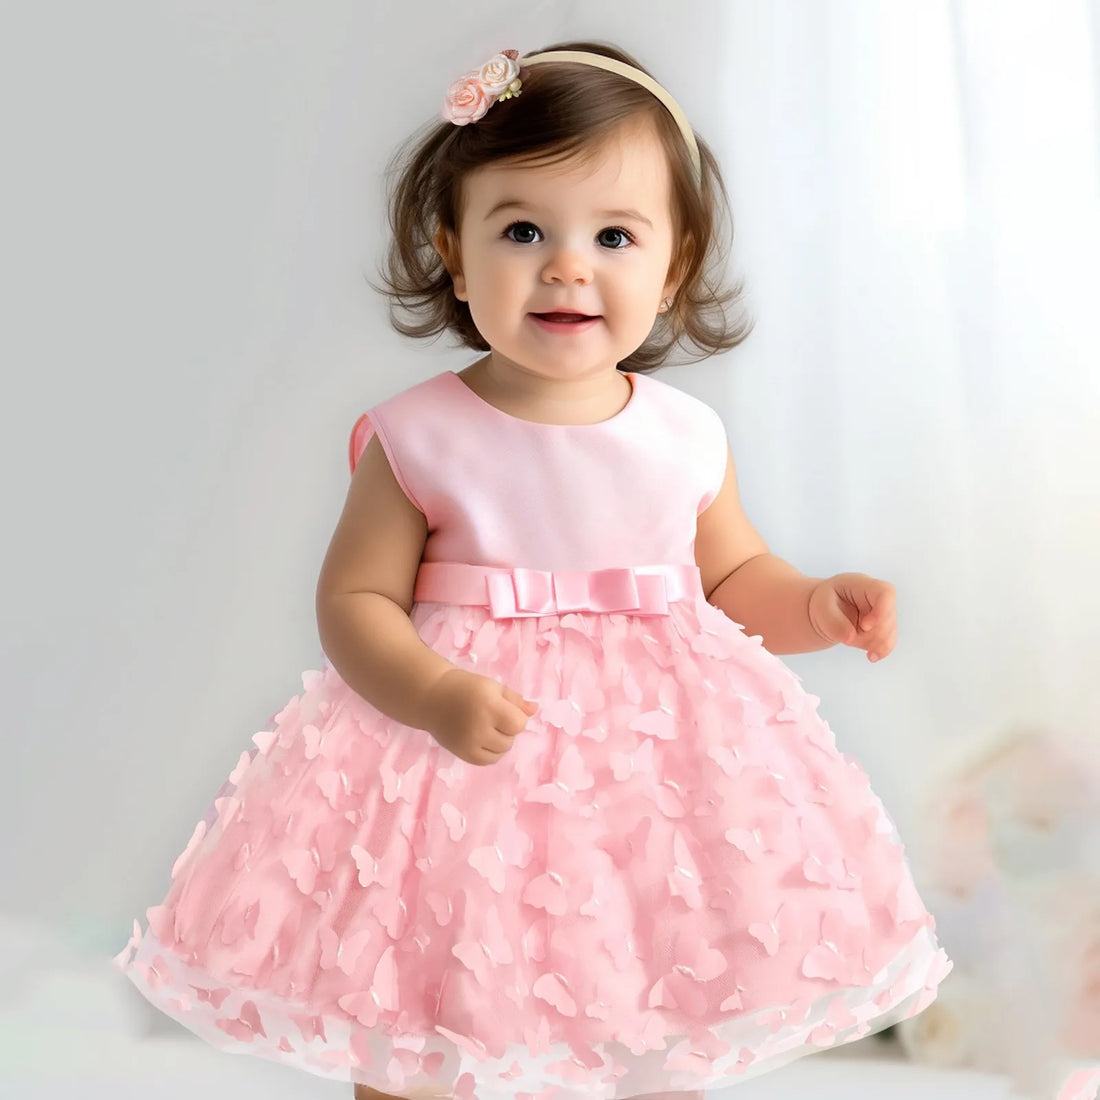 Infant Sleeveless Birthday Party Dress Purple United States by Baby Minaj Cruz